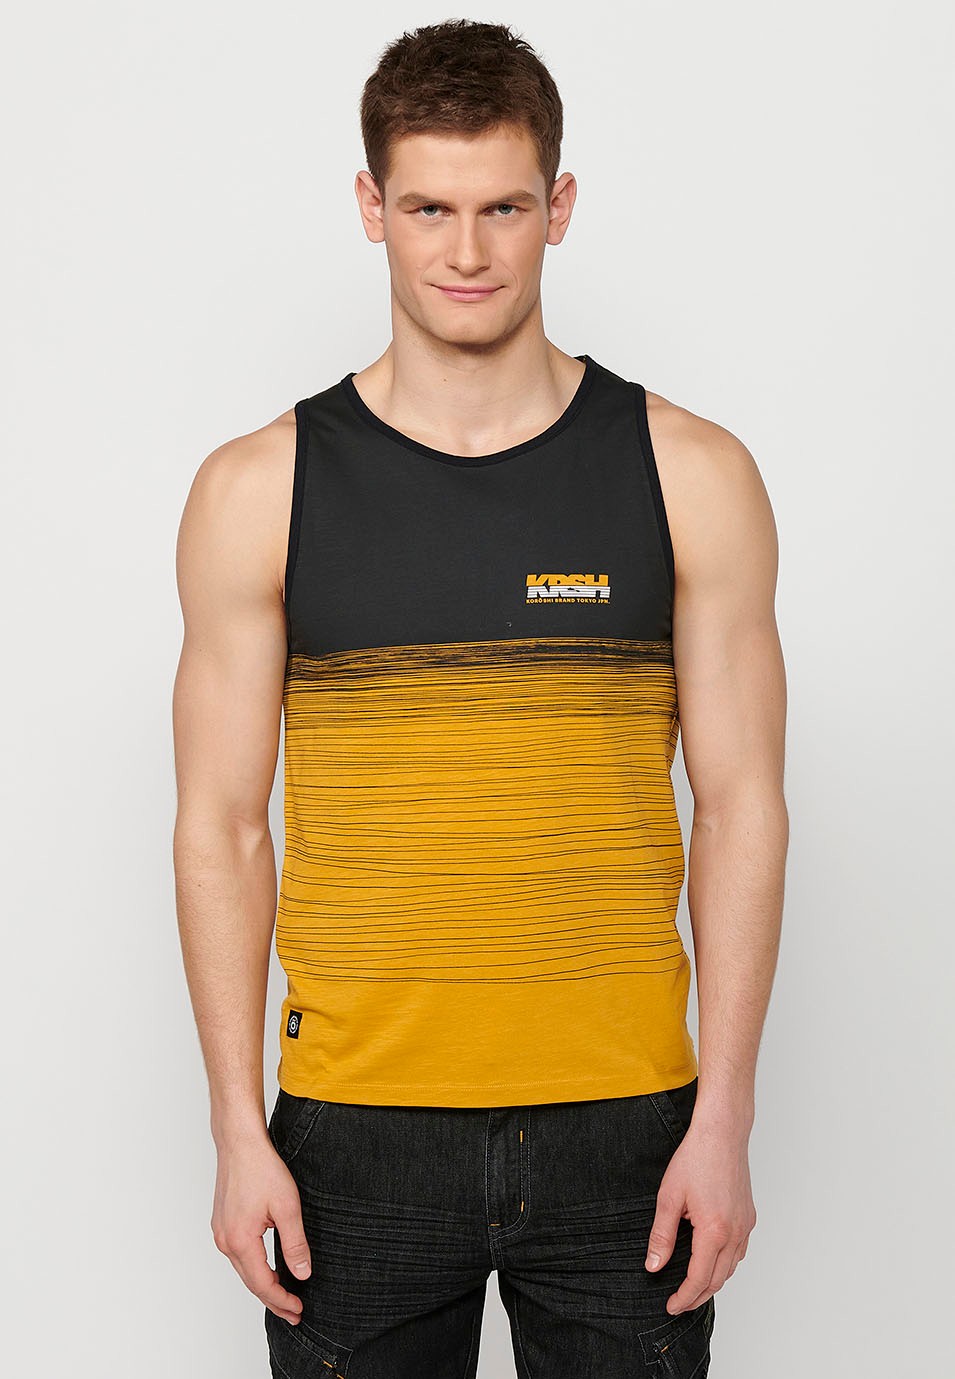 Camiseta de tirantes, estampado degradado amarillo, para hombres